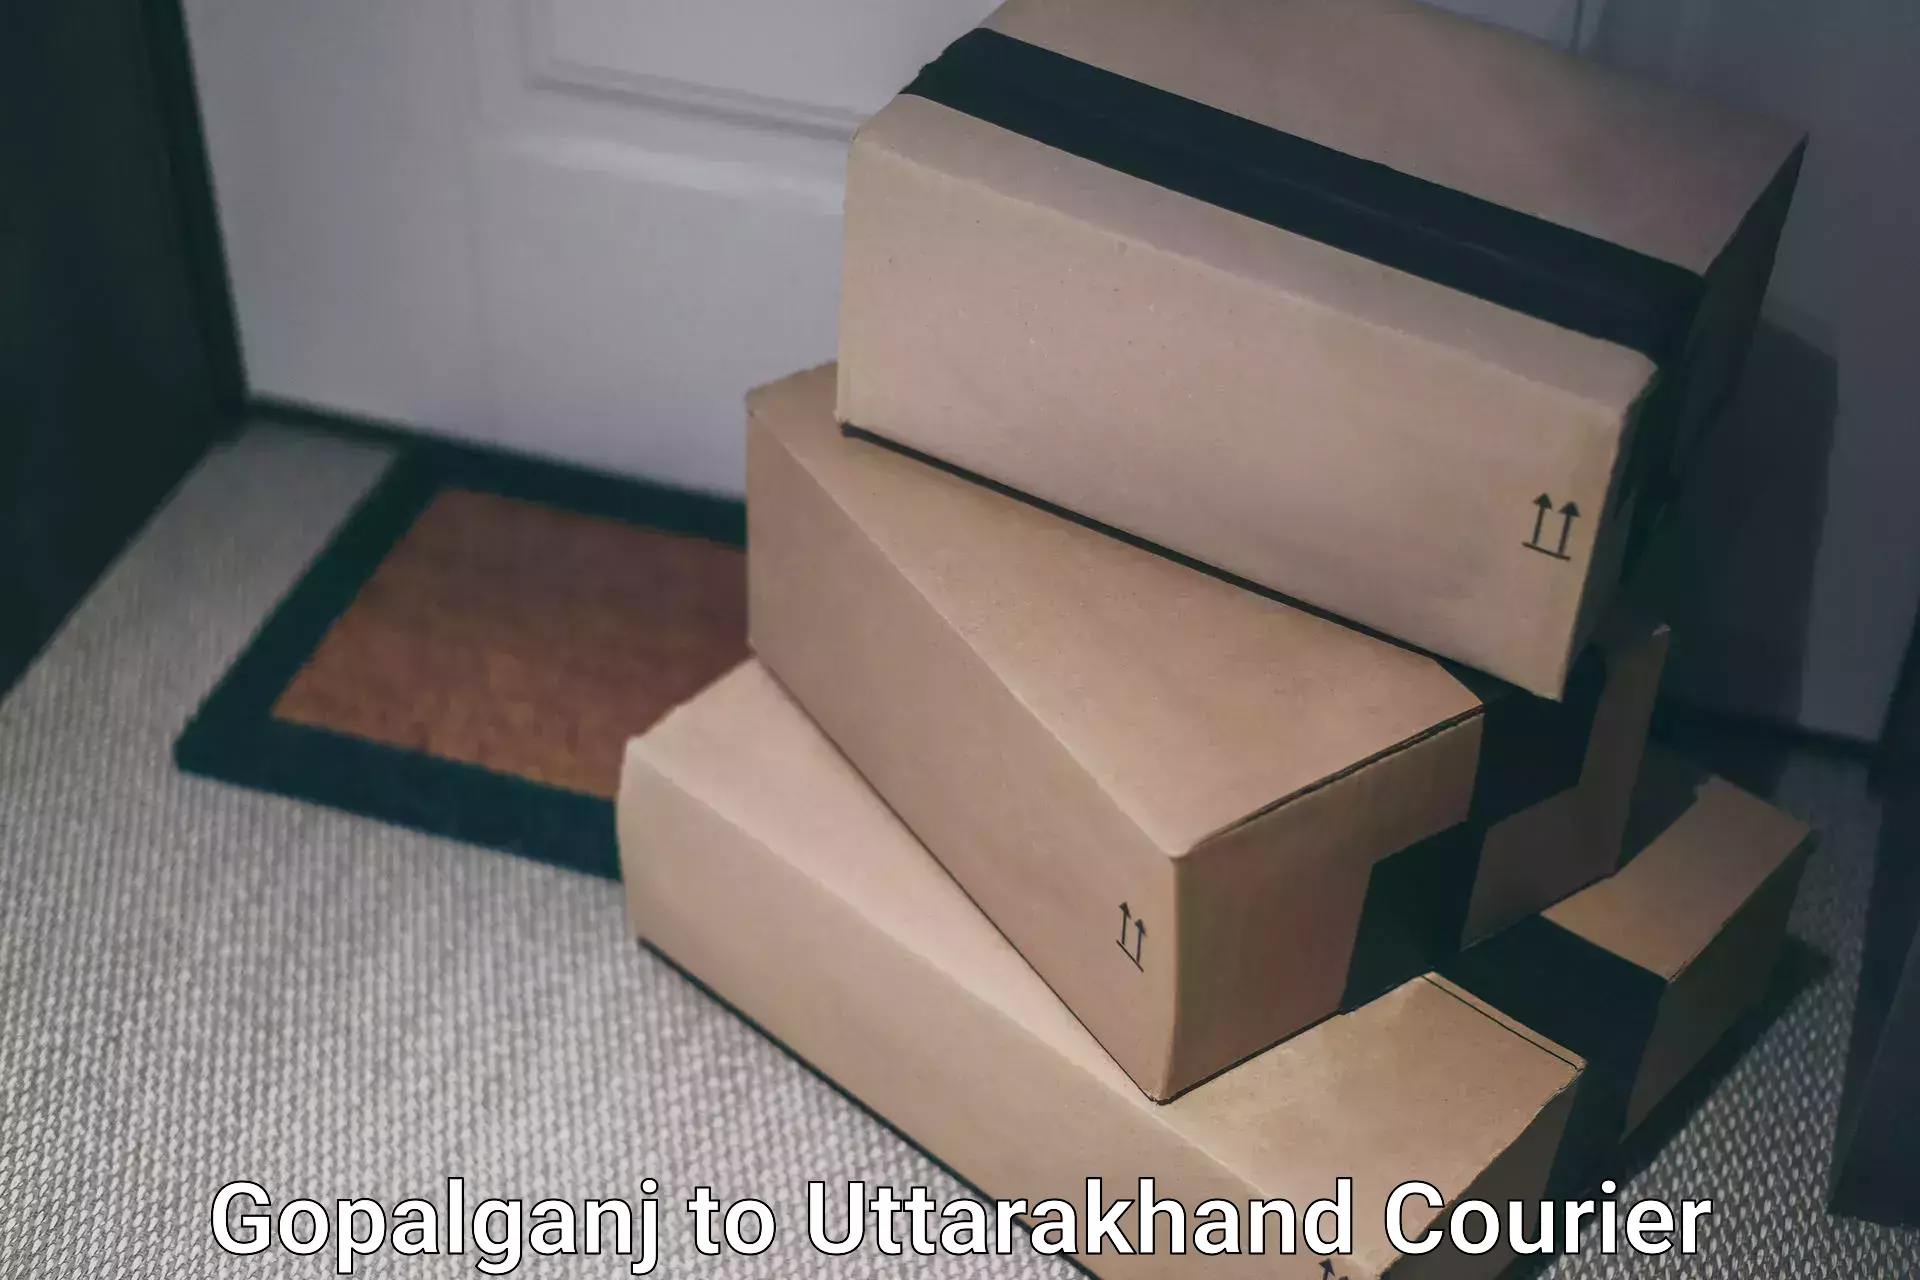 Global courier networks Gopalganj to Uttarkashi